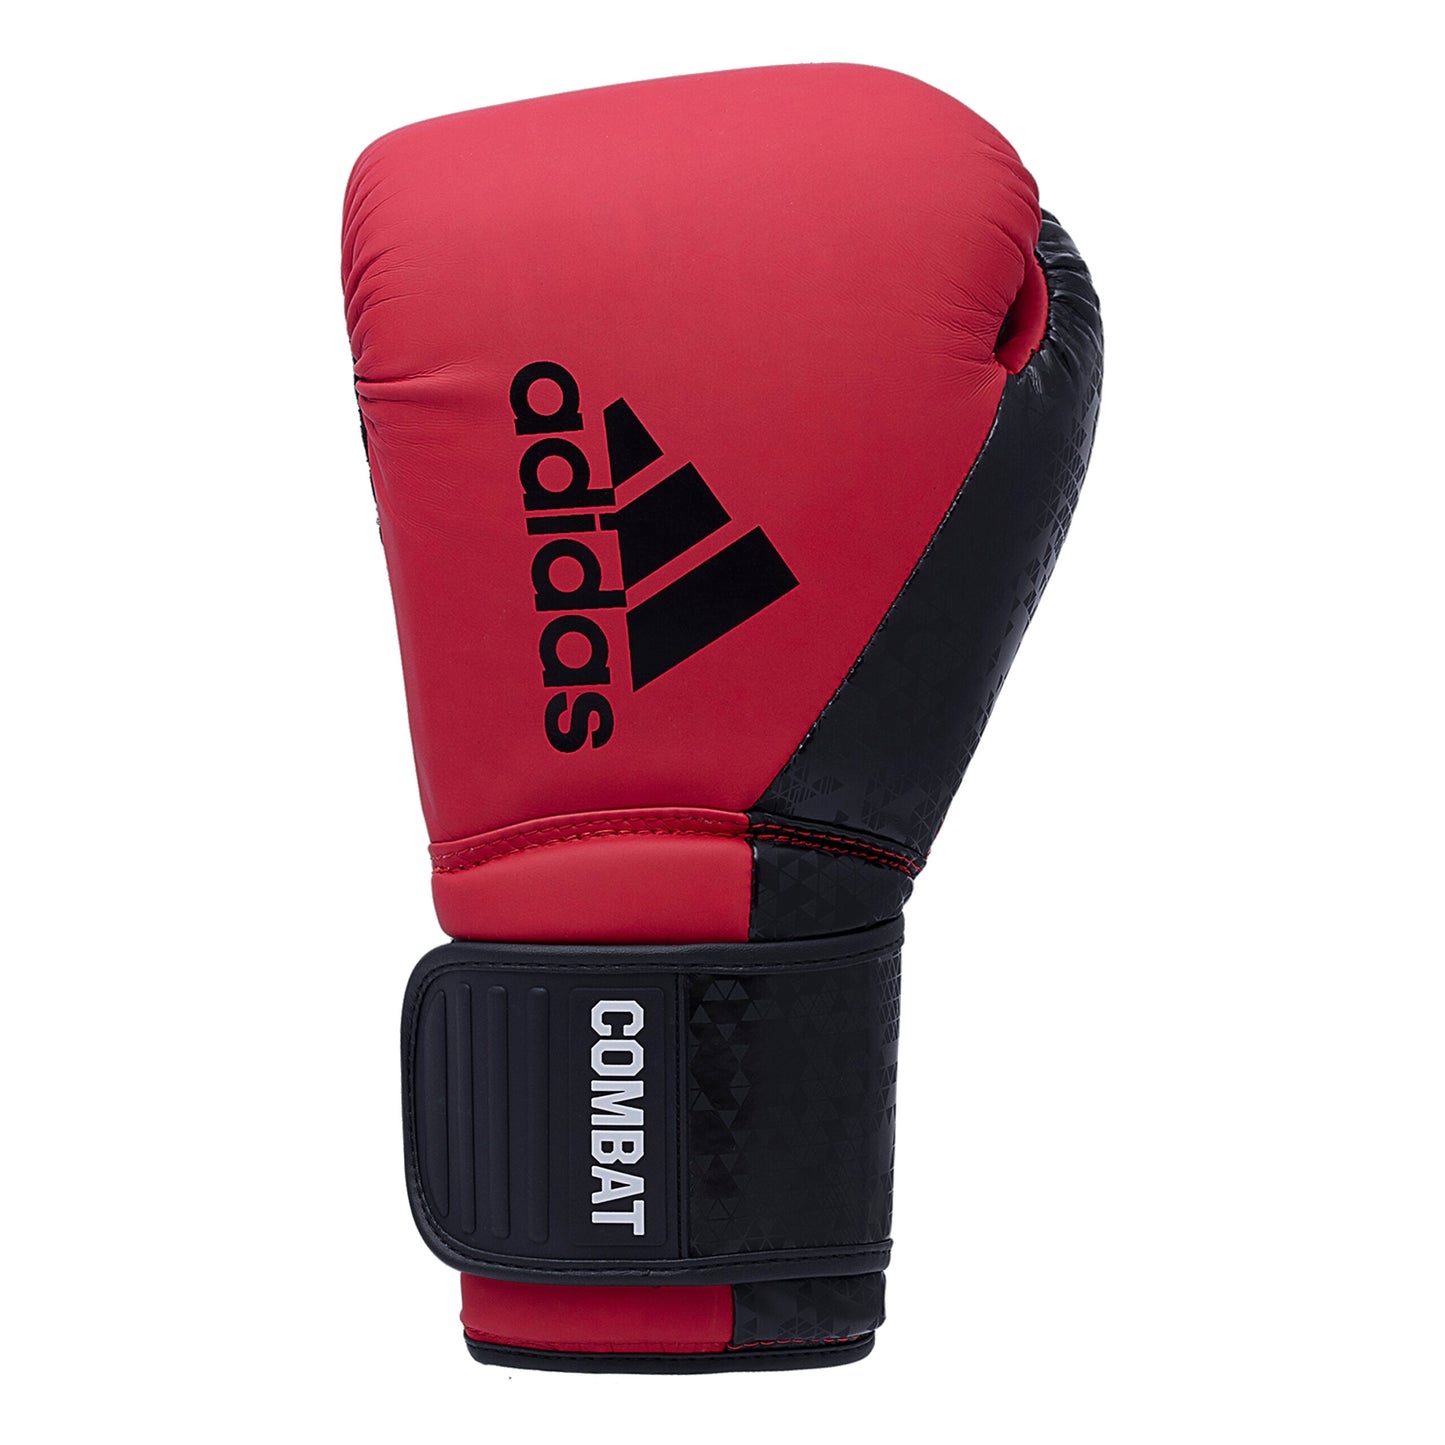 Adic50tg Combat 50 Training Boxing Gloves Vivid Red Black 01